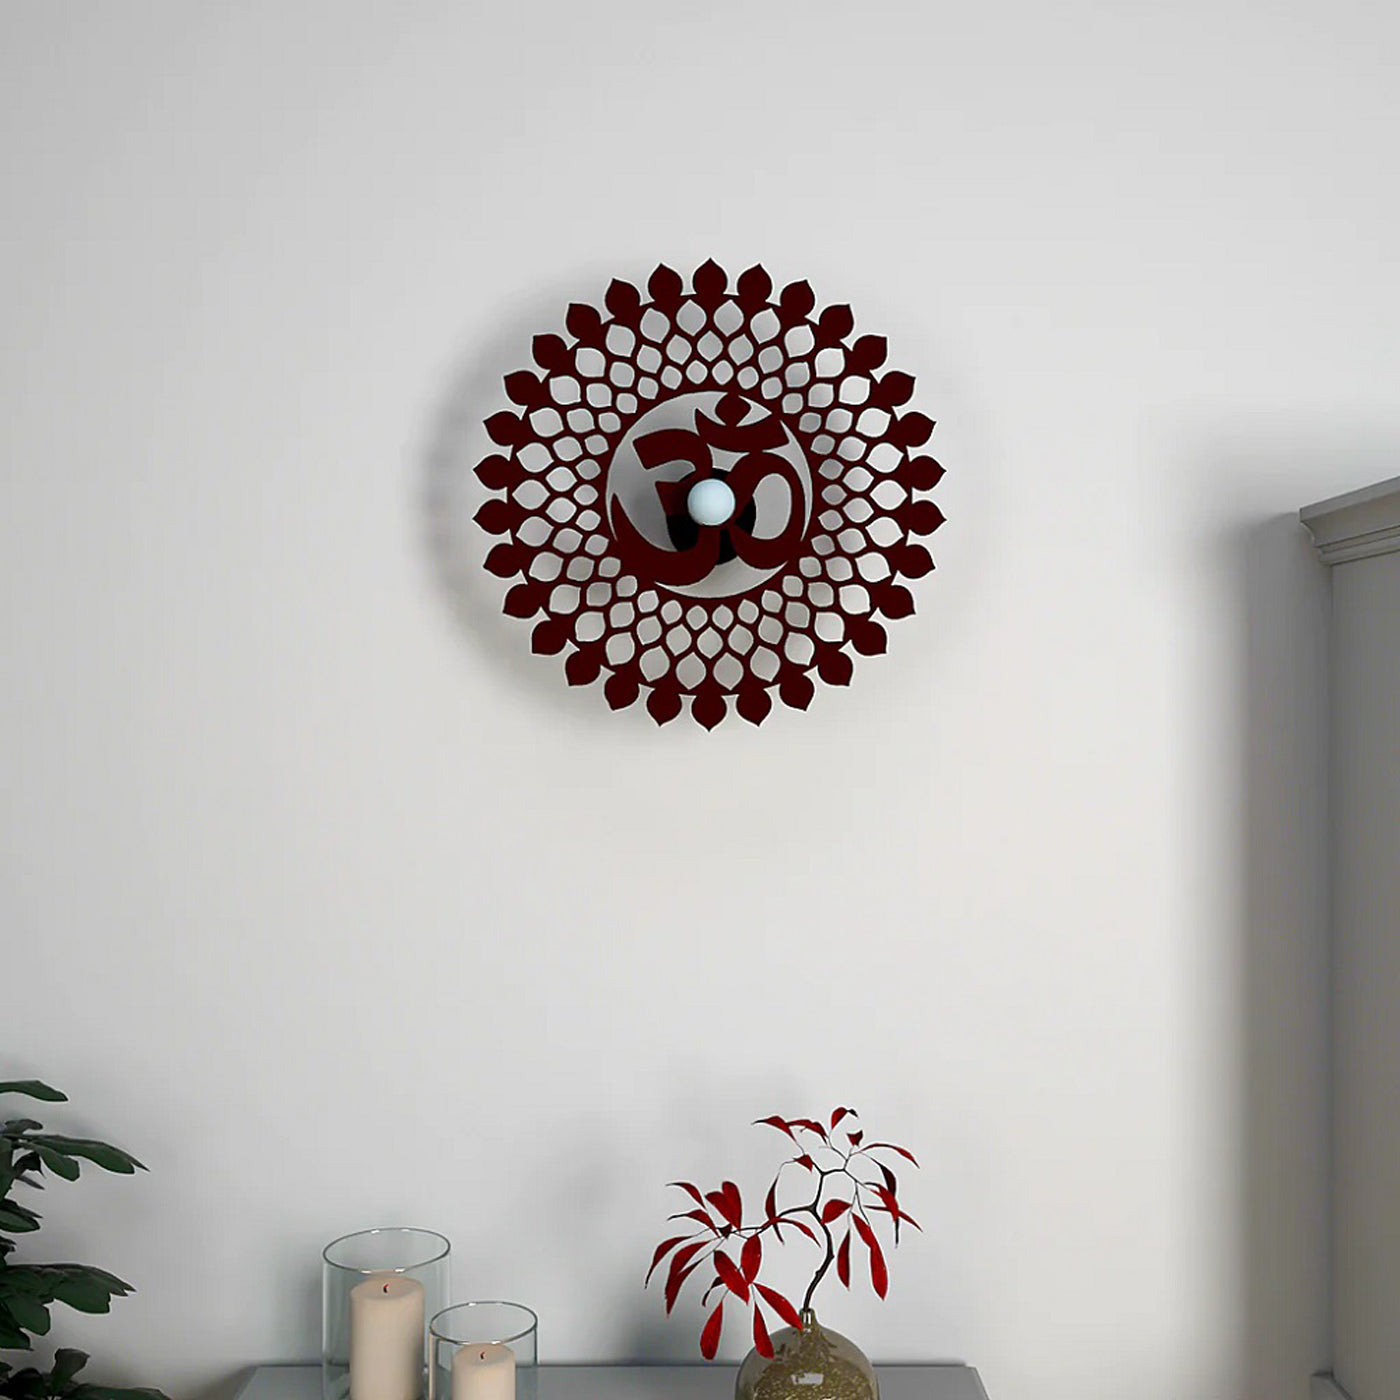 OM Mandala Design Shadow lamp for Home / Office wall decor